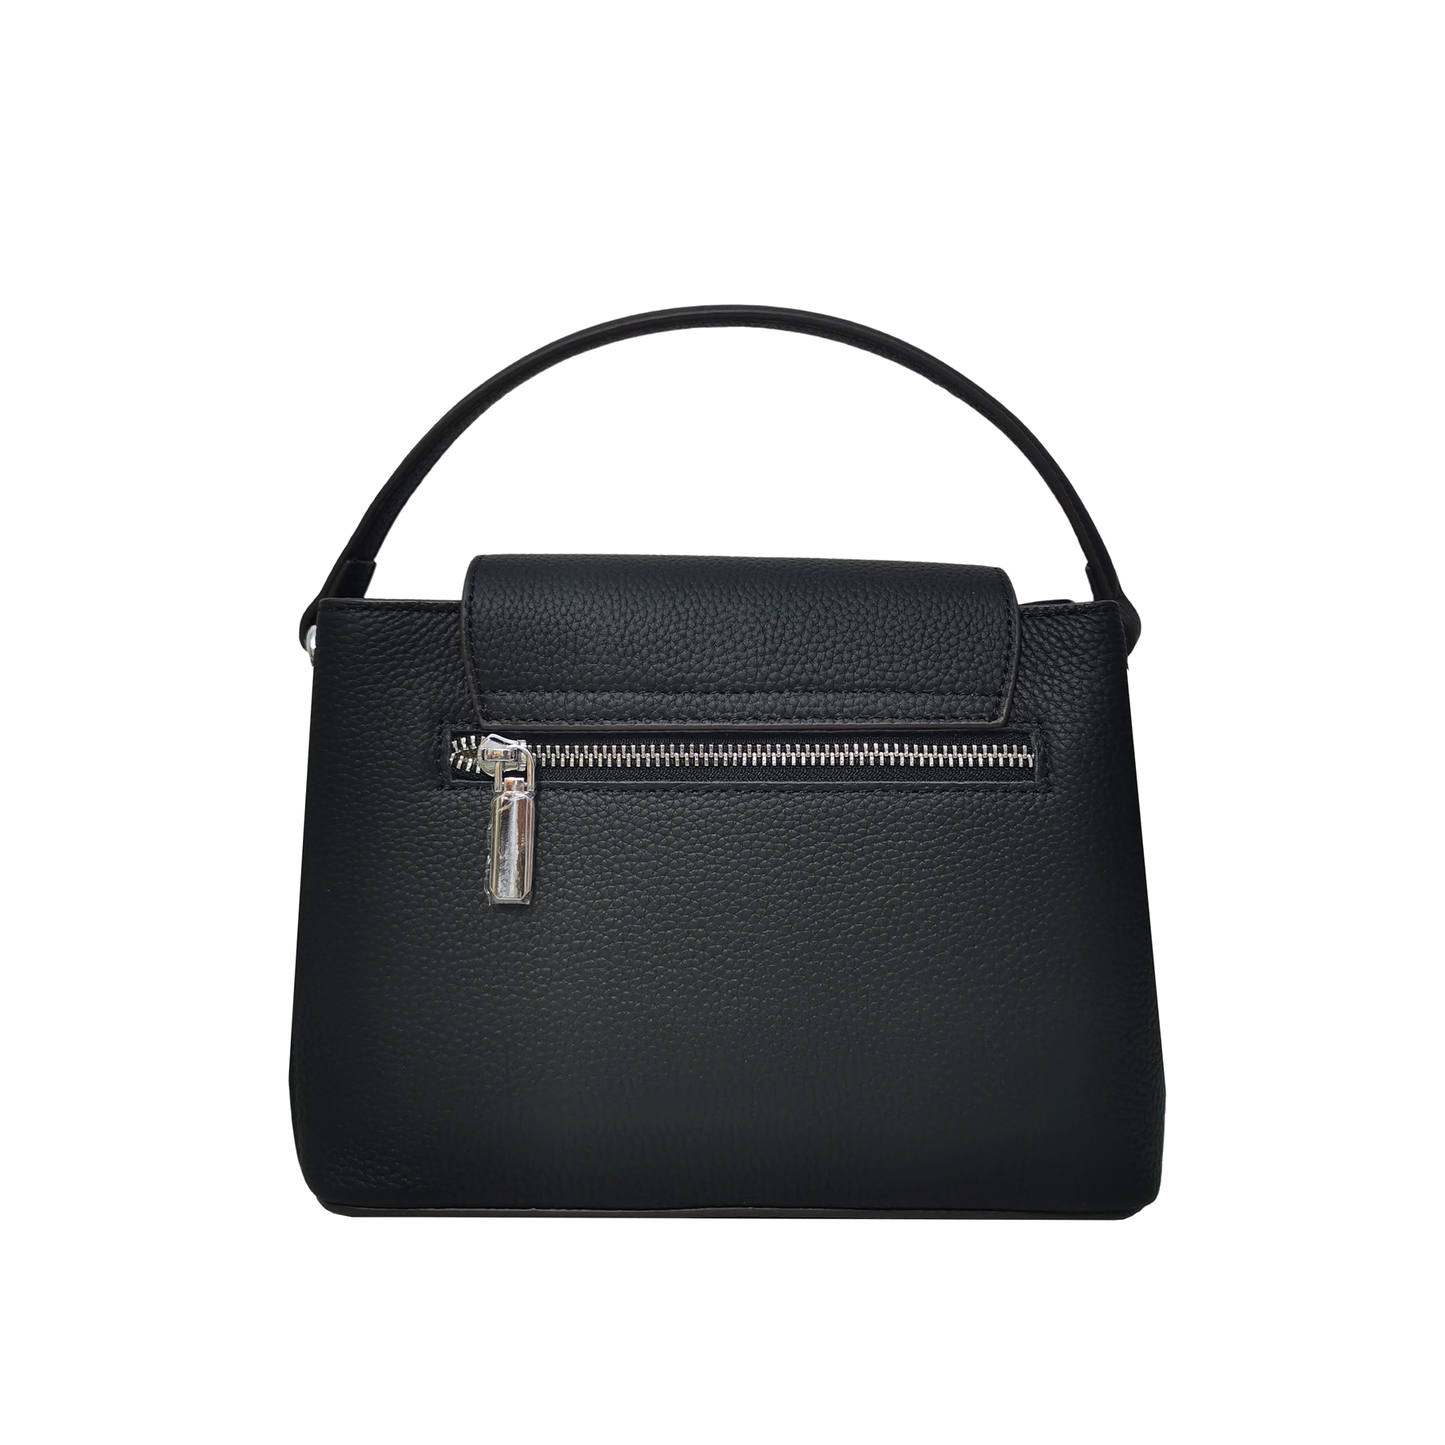 Women's genuine cowhide leather handbag Lorena design